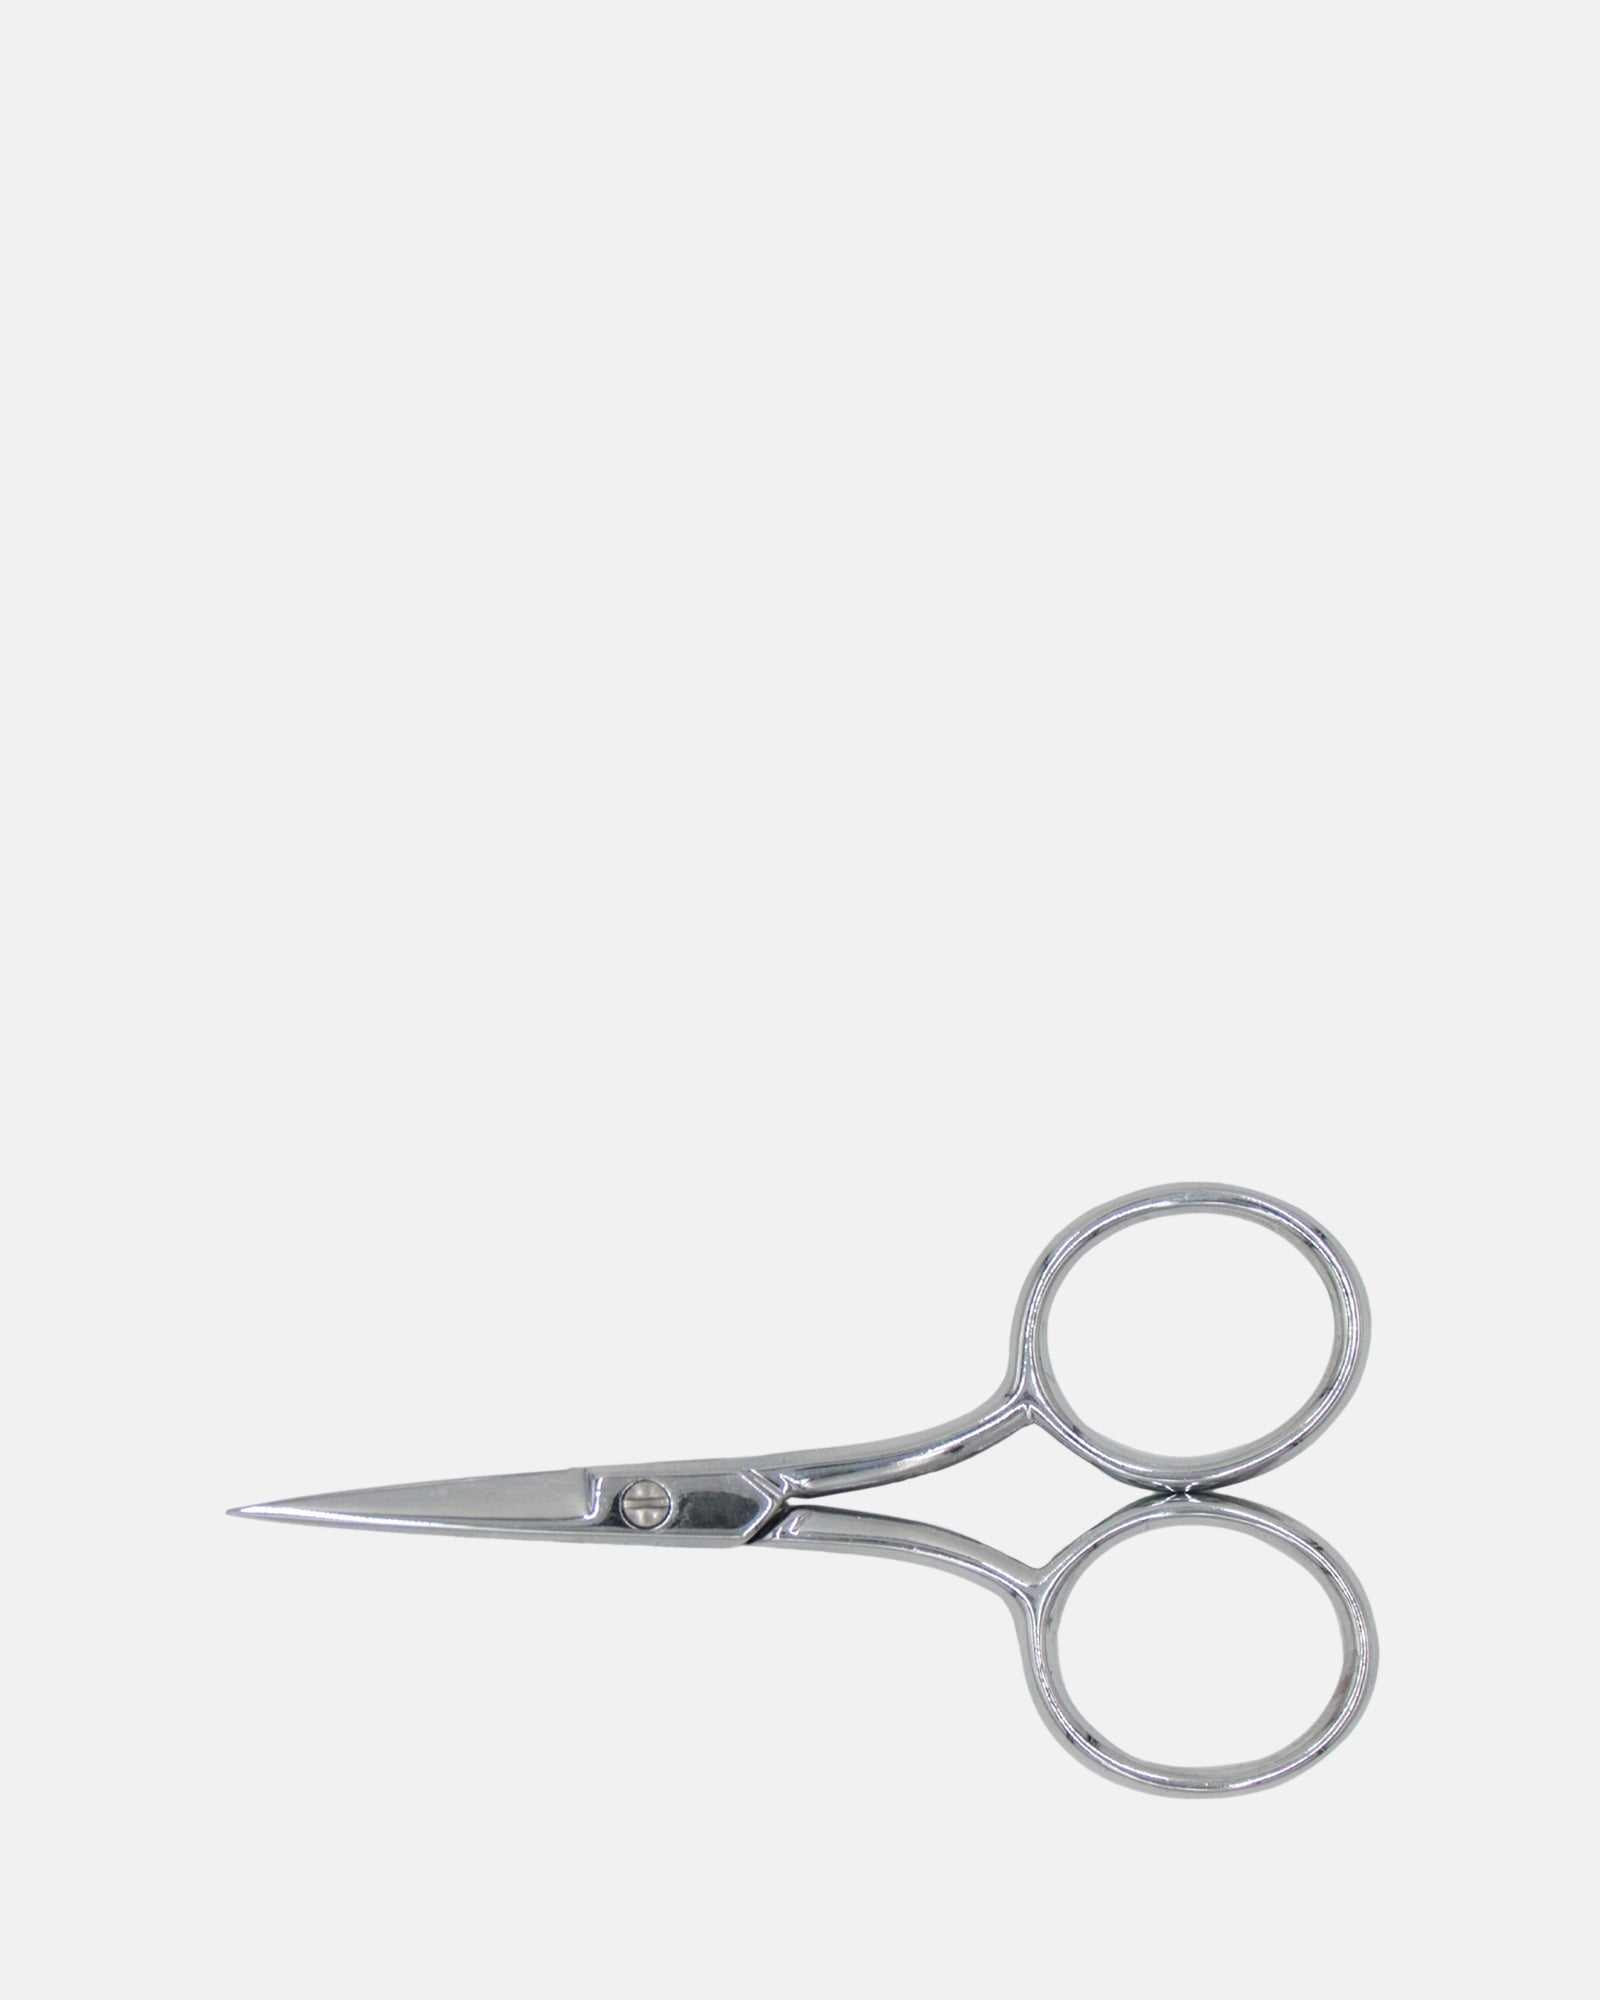 Embroidery Scissors - BRIT LOCKER